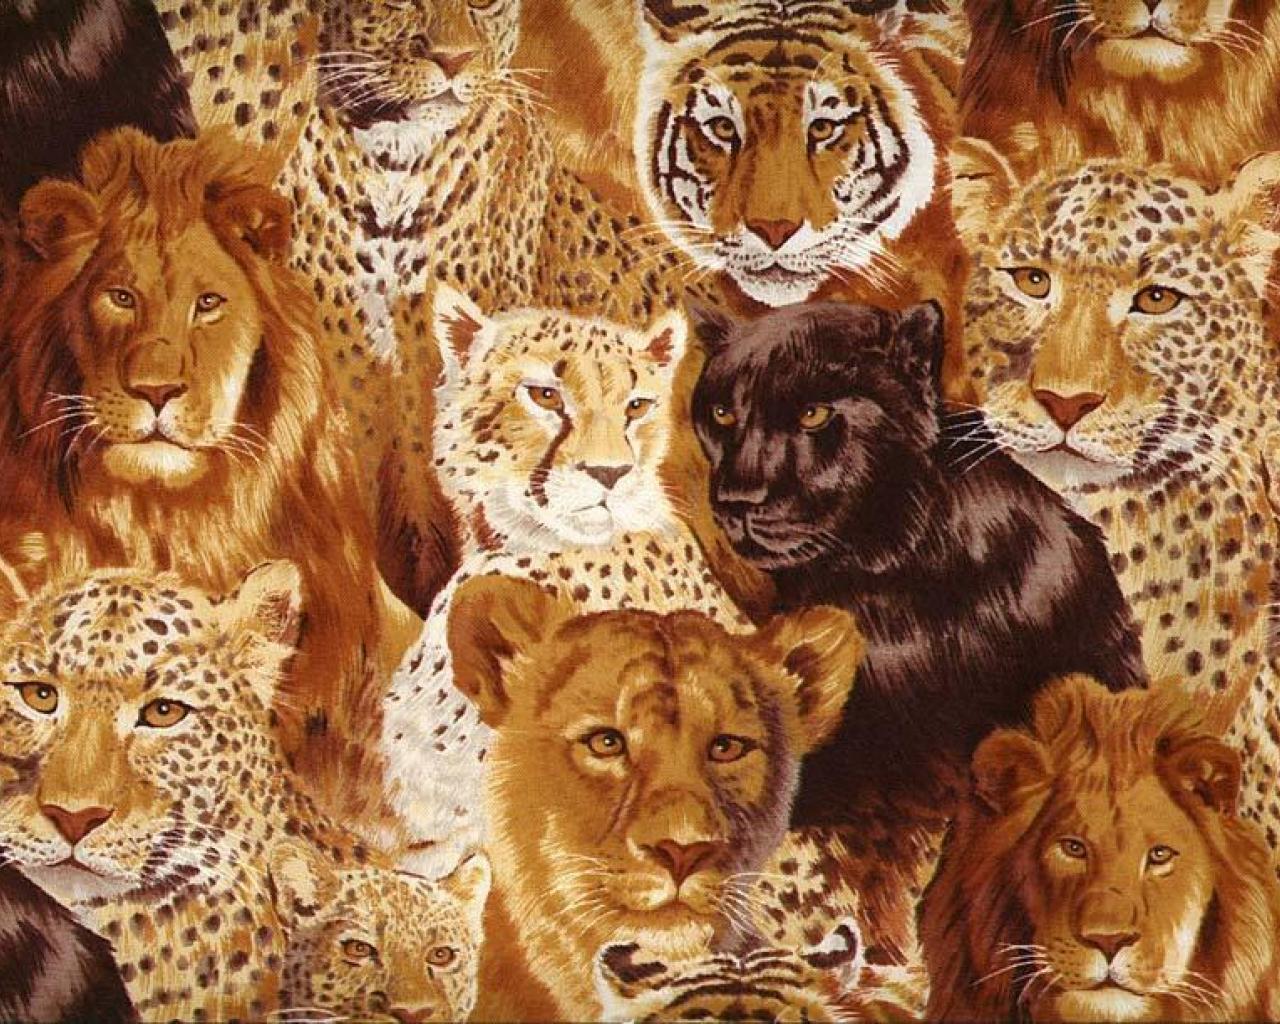 Big Cats Wallpapers High Resolution - WallpaperSafari